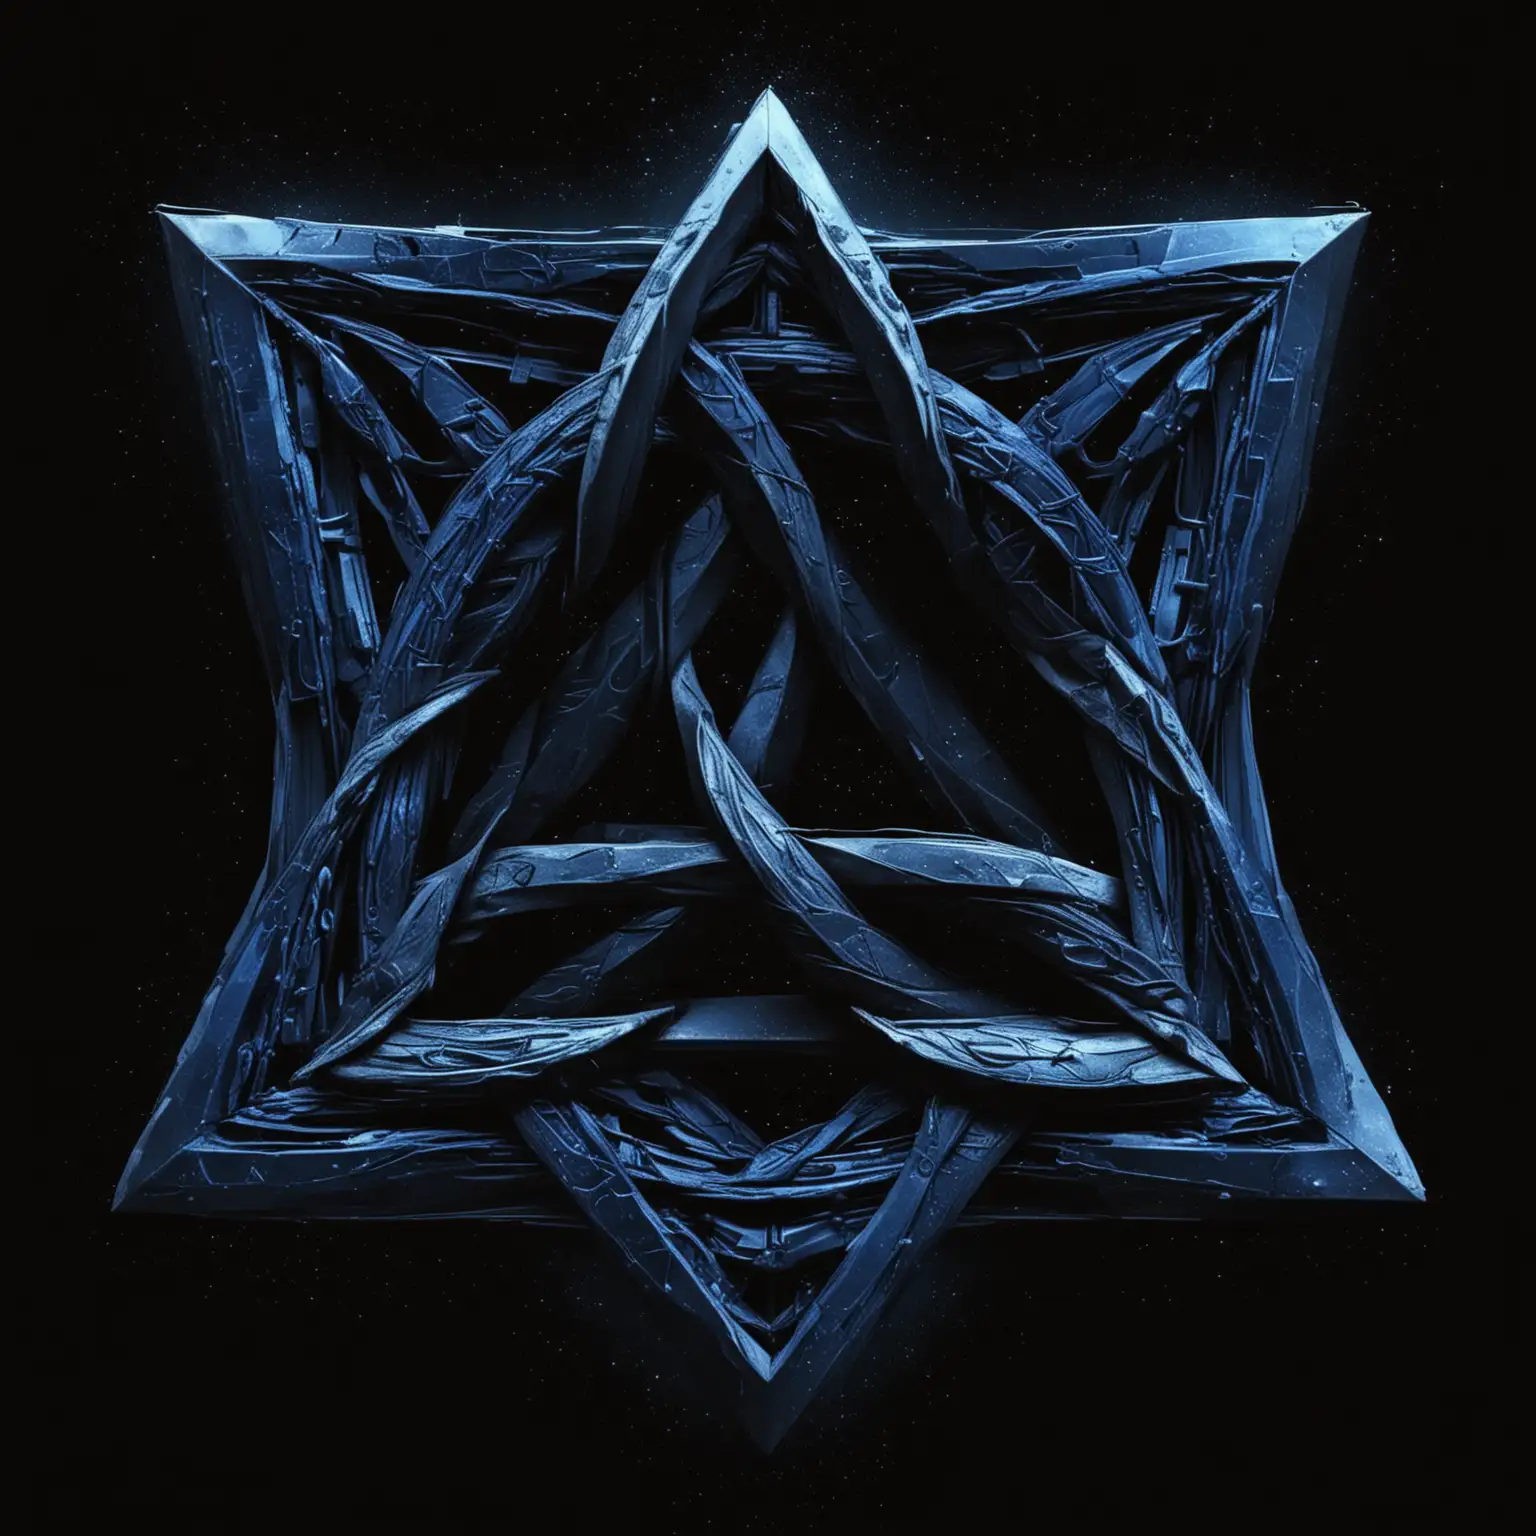 Futuristic Violetblue Triangle Trinity Knot on Black Background